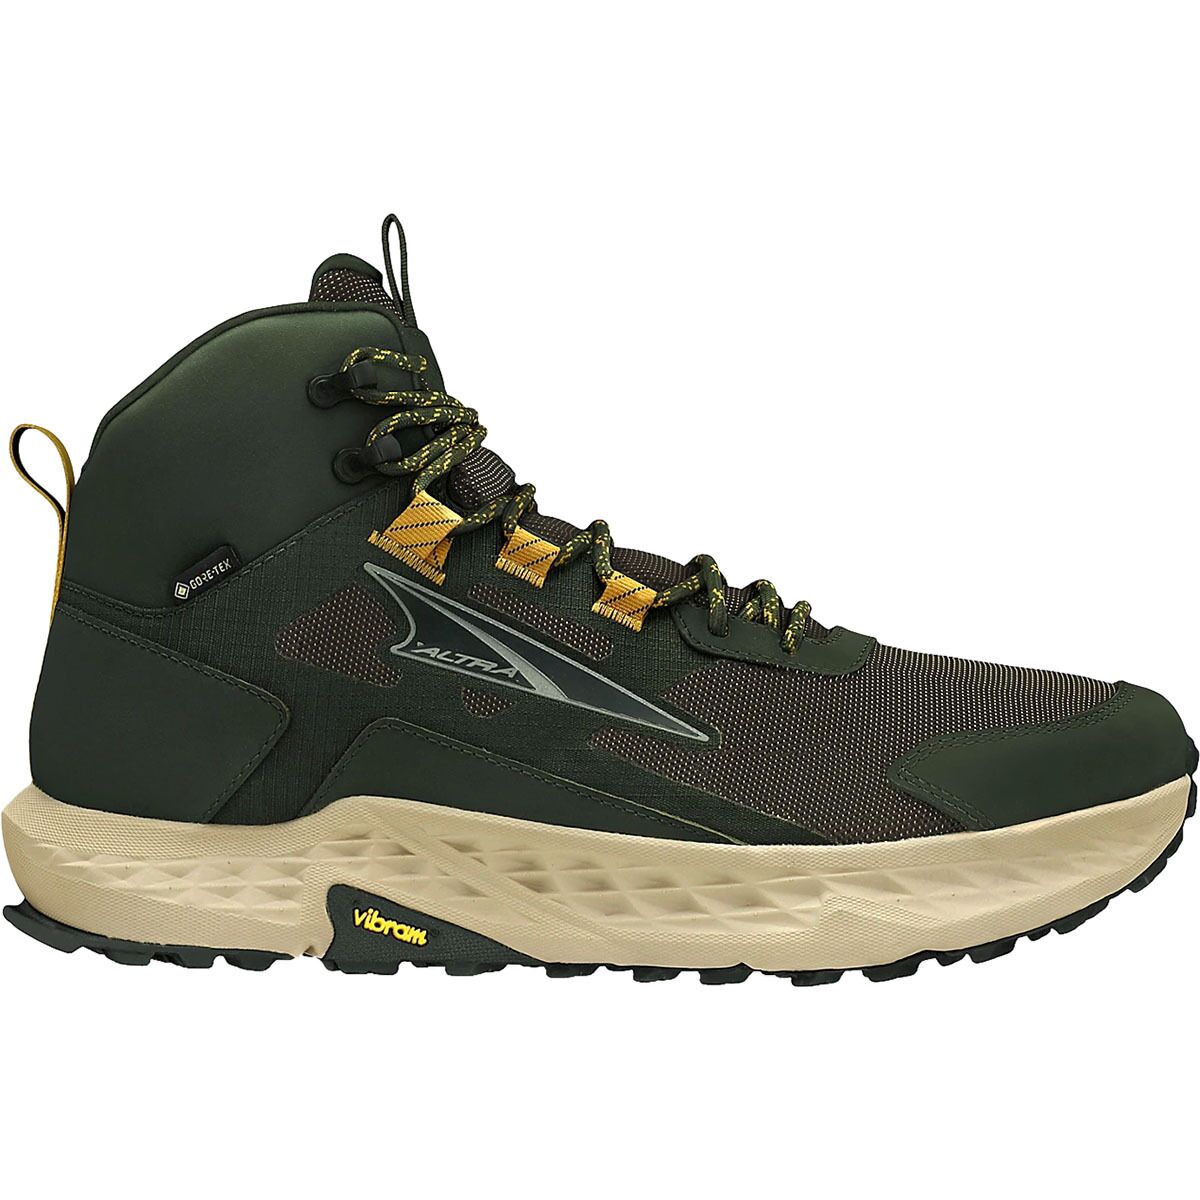 Timp Hiker GTX Shoe - Men